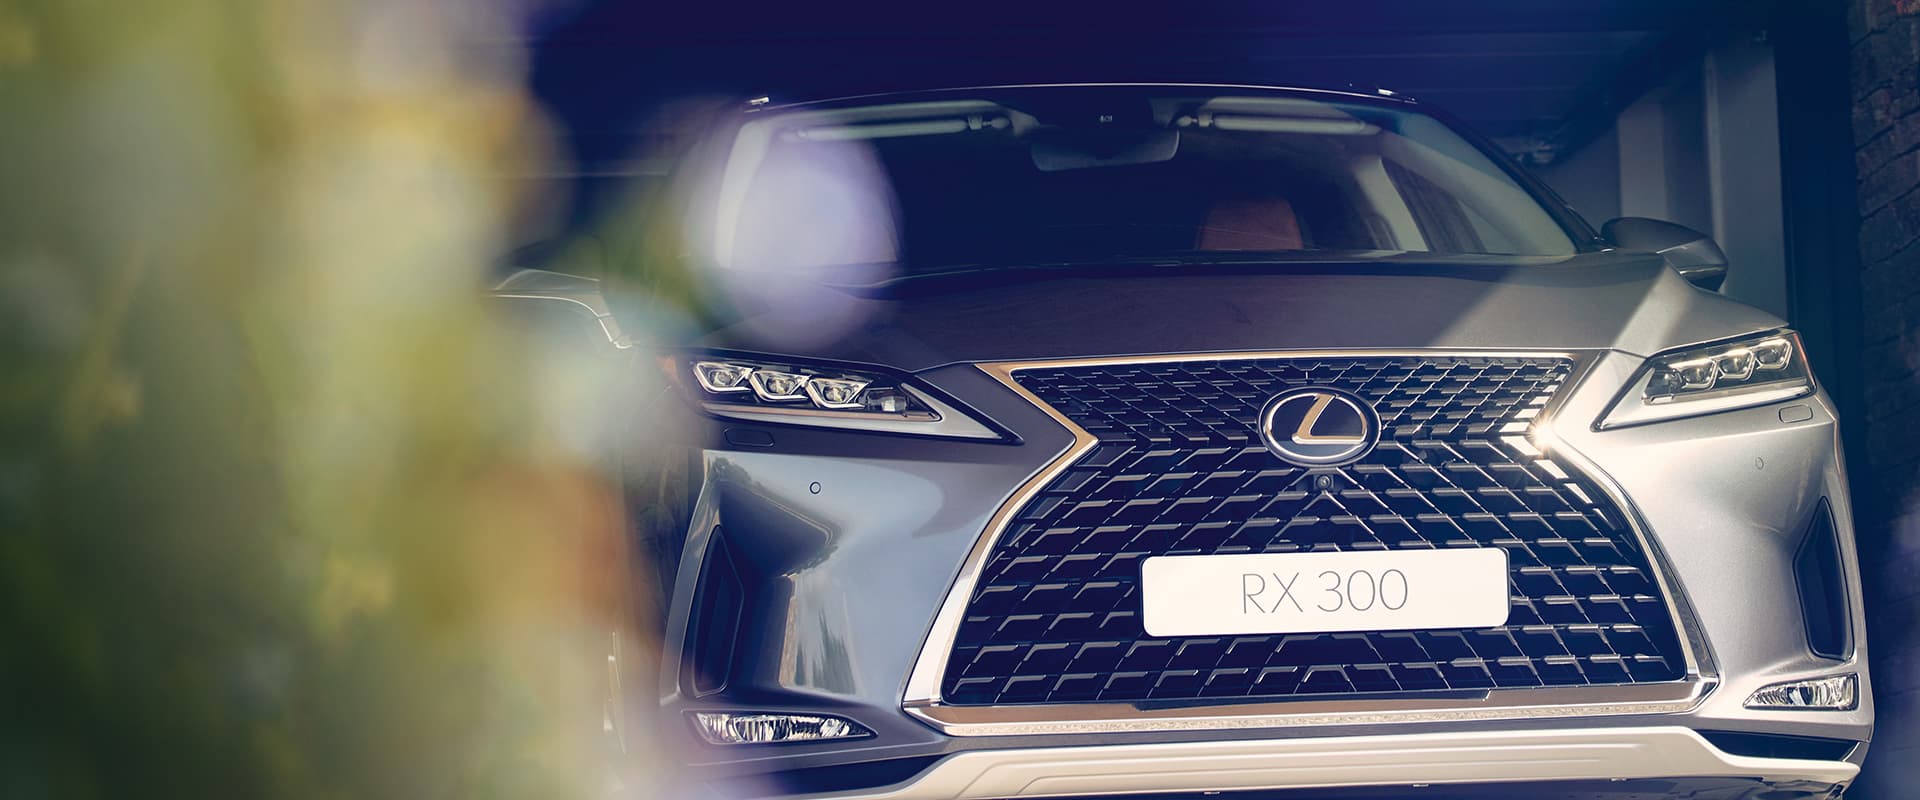 Lexus Rx 300 Luxury | Suv | Crossover | Lexus Indonesia